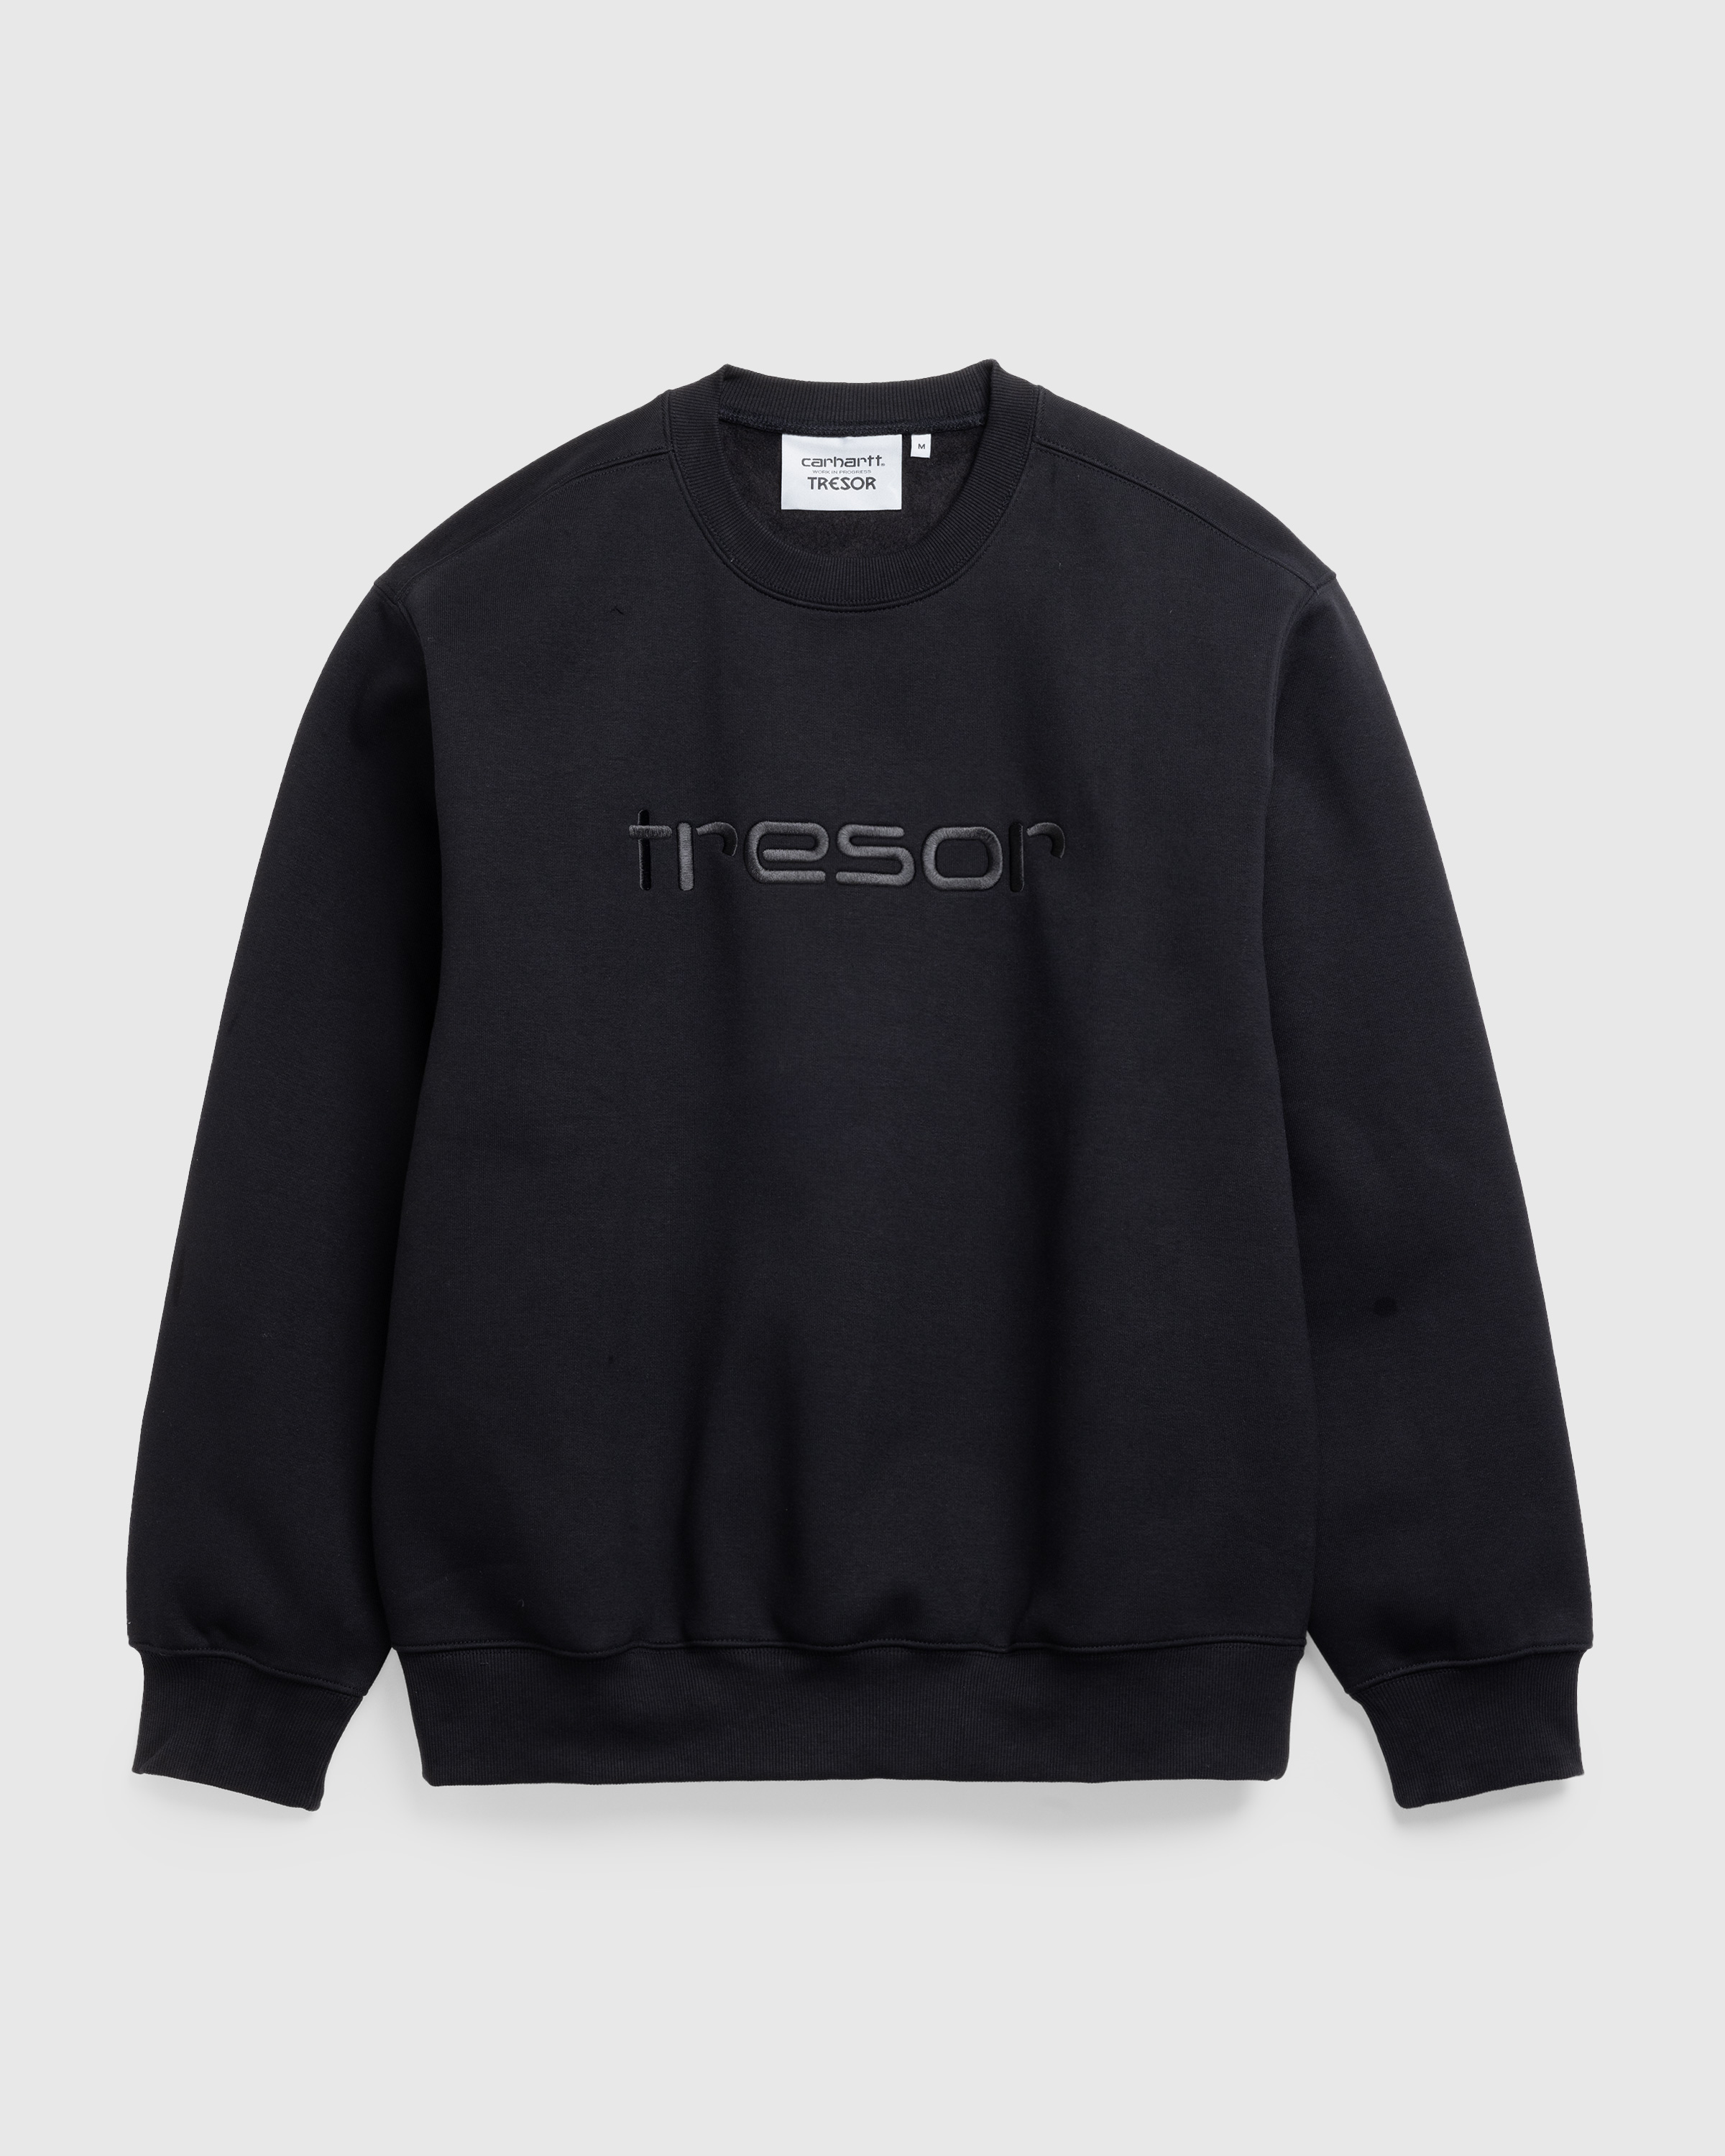 Carhartt WIP x Tresor – Techno Alliance Sweatshirt Black/Grey - Knitwear - Black - Image 1